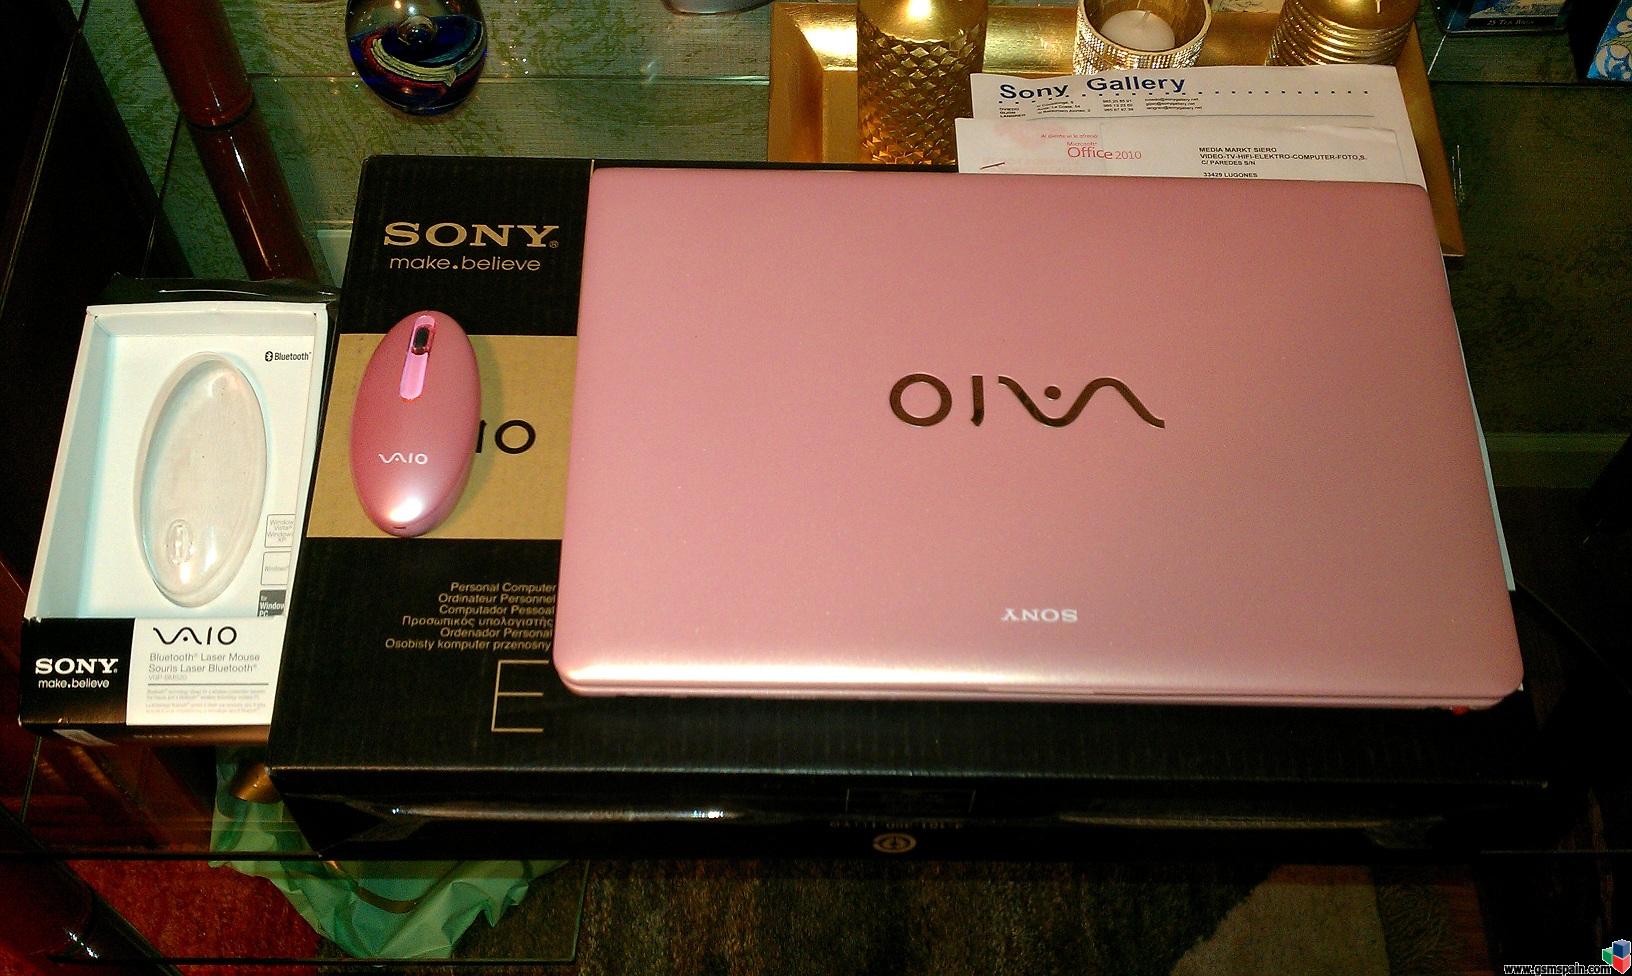 CAMBIO] Sony Vaio E rosa + ratón a juego Sony Bluetooth rosa x nuevo Ipad